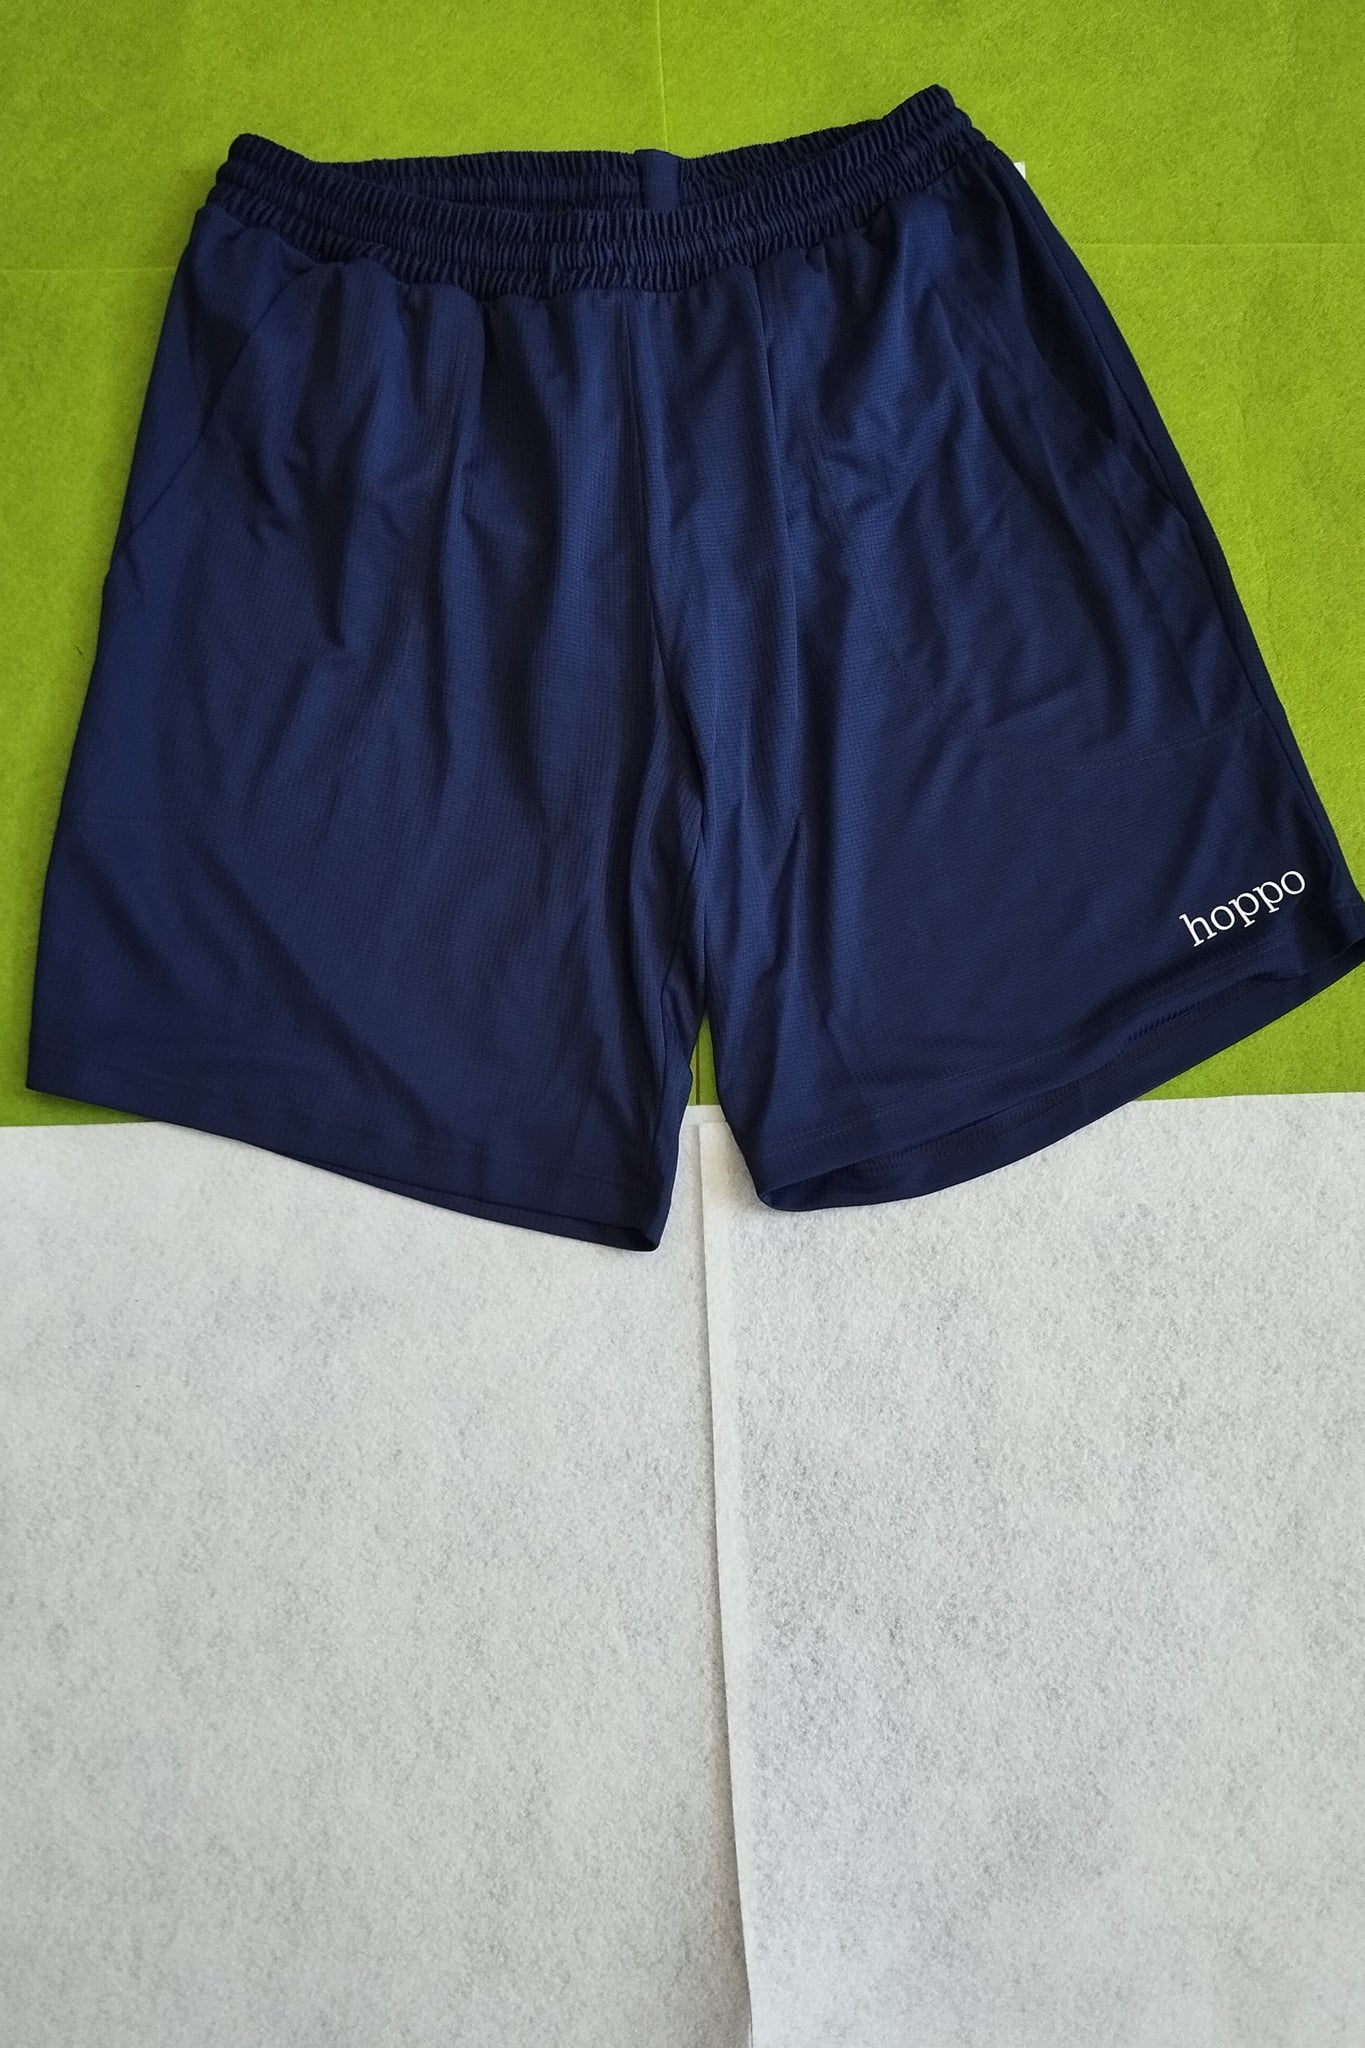 Pantalón corto básico azul marino